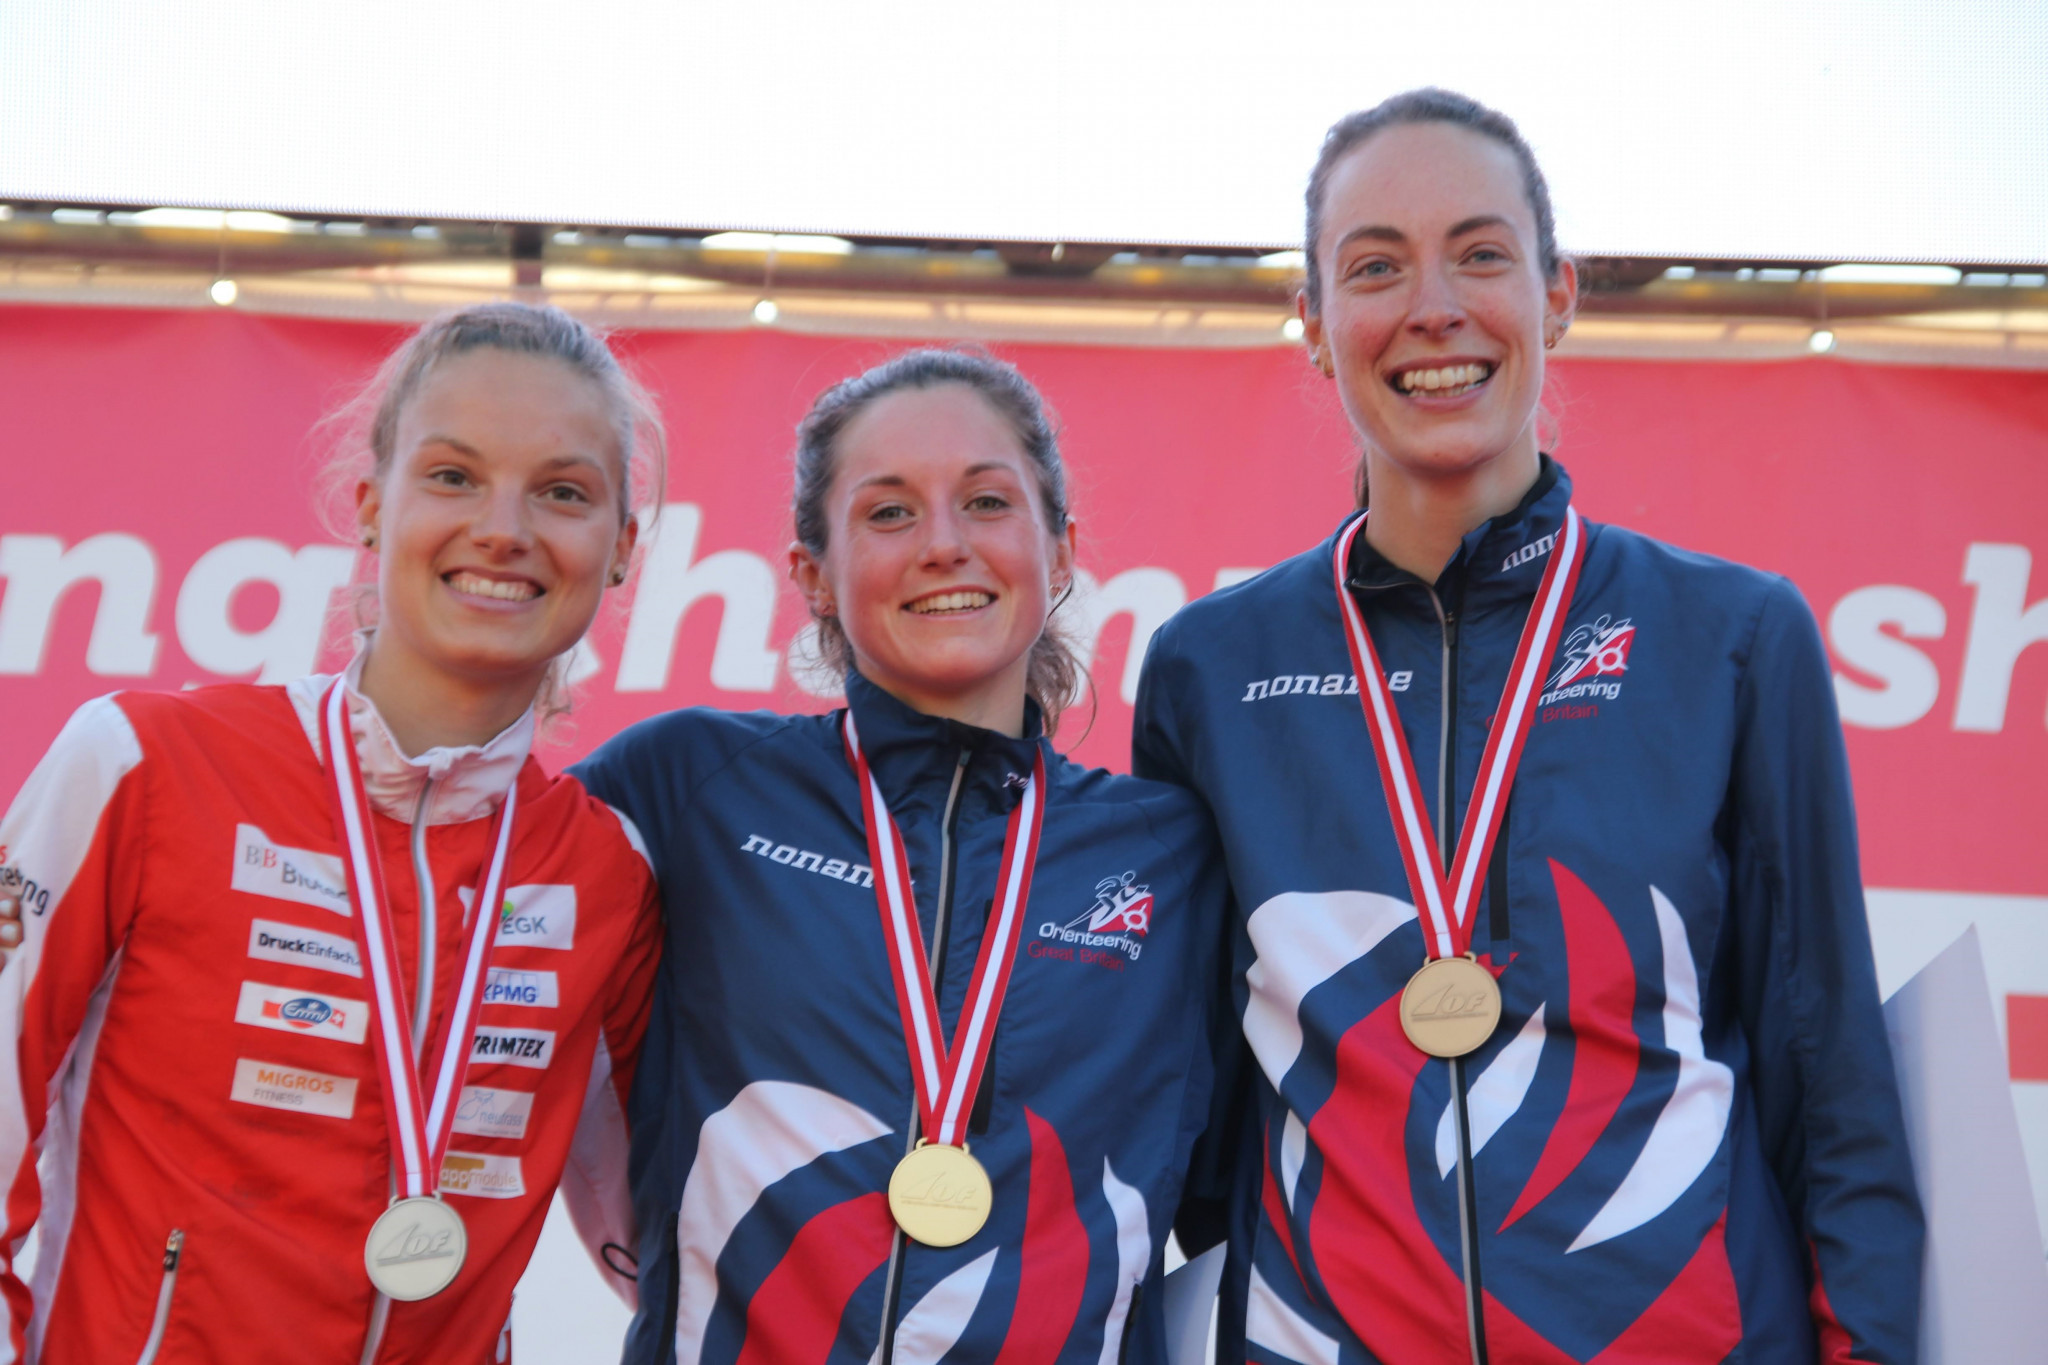 Carter Davies wins women’s orienteering sprint title as Alexandersson falters